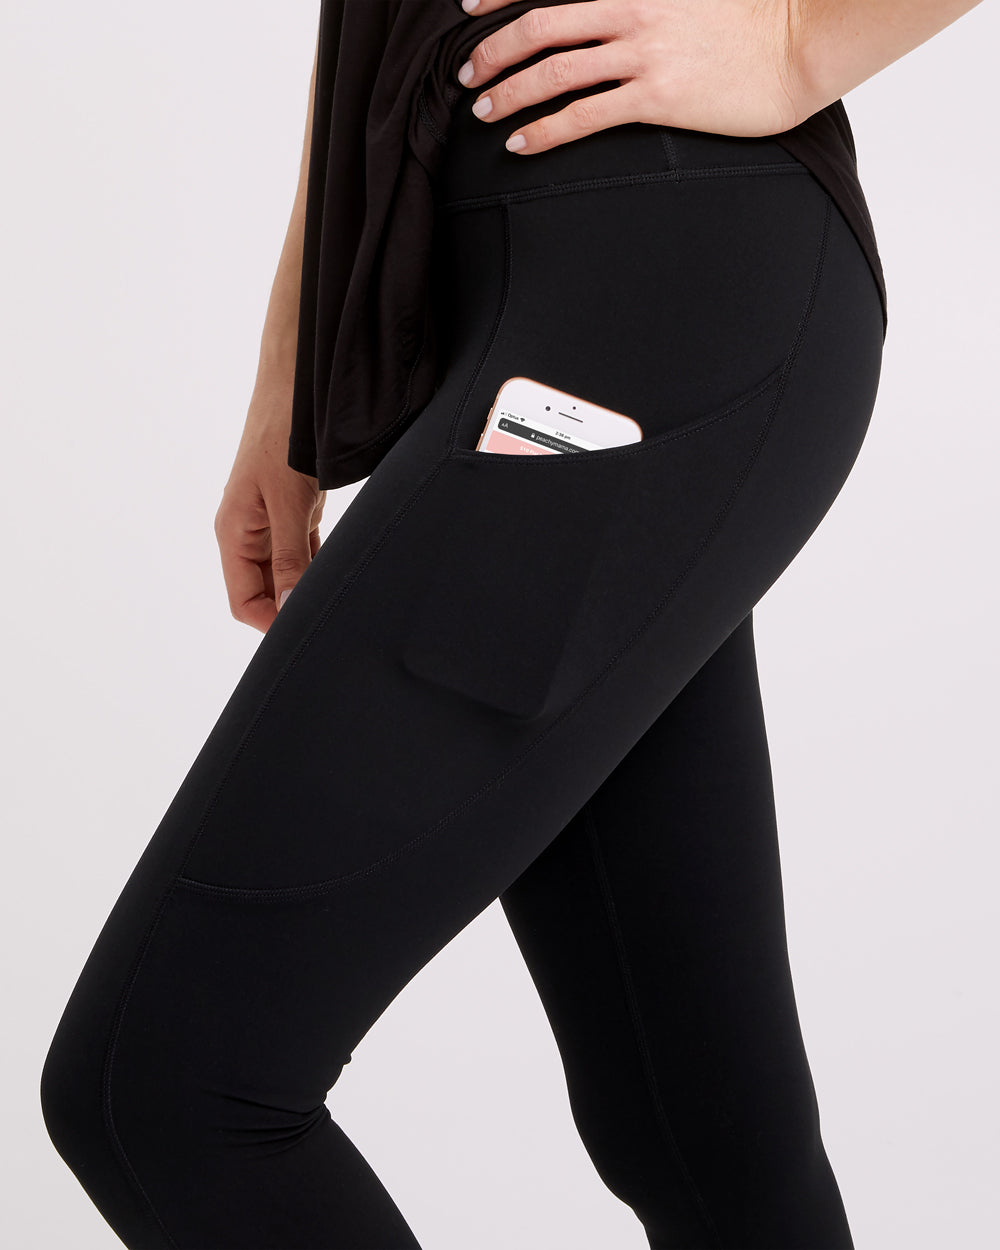 Peachymama Postpartum Activewear Pocket Pants - Black - 3